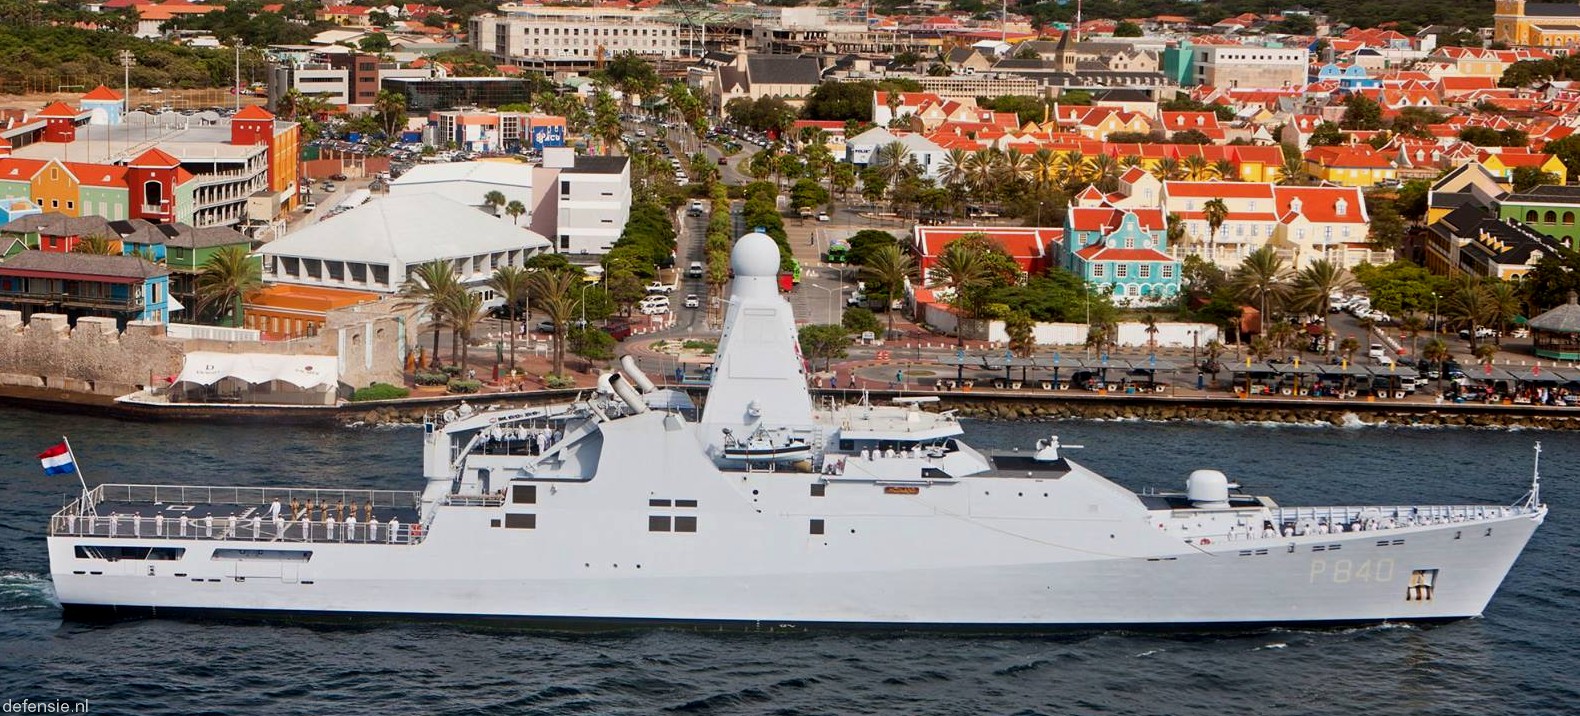 p-840 hnlms holland offshore patrol vessel opv royal netherlands navy 18